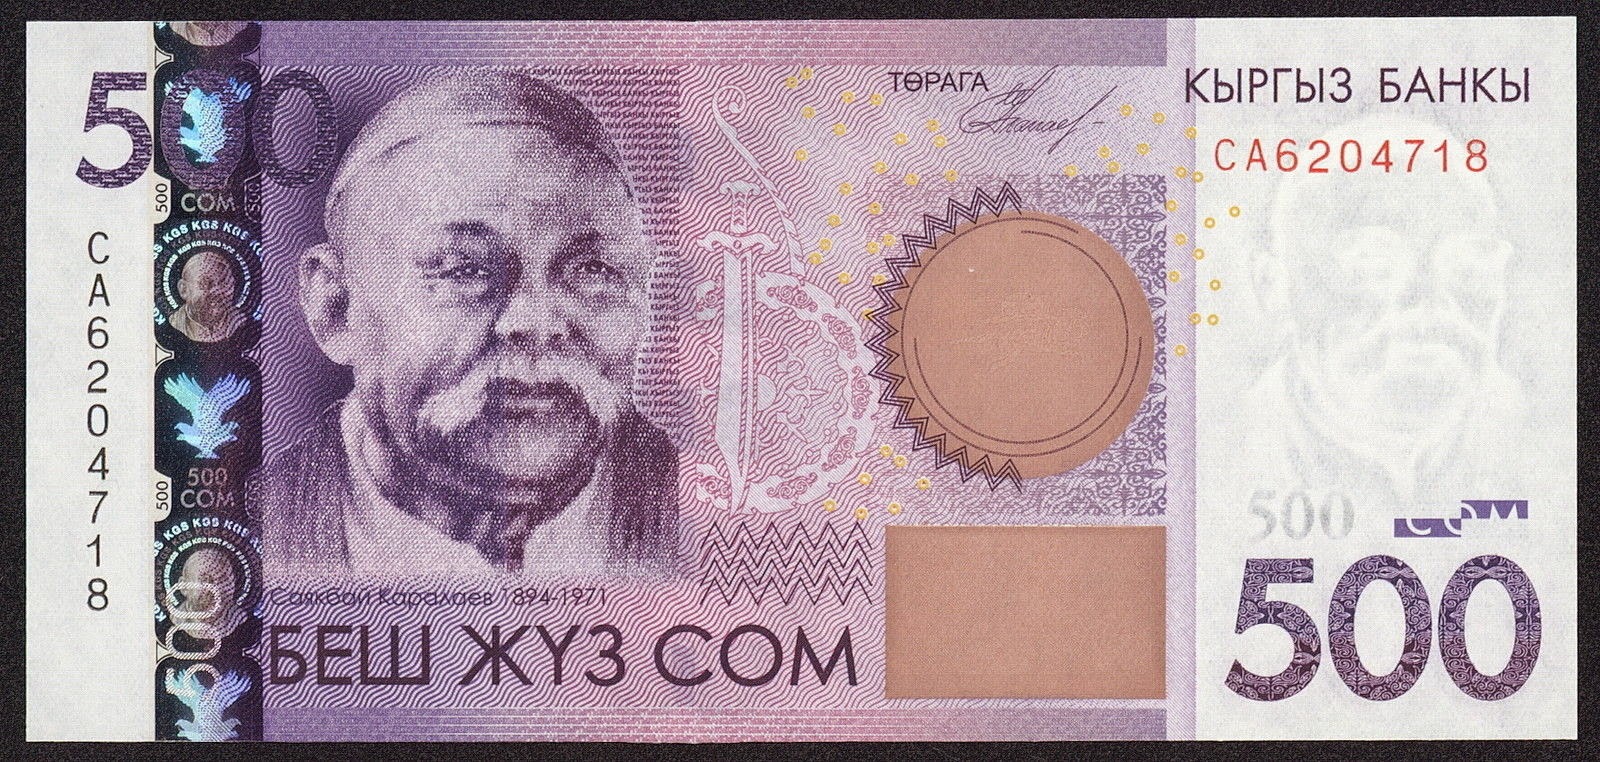 Kyrgyzstan Banknotes 500 Som note 2010